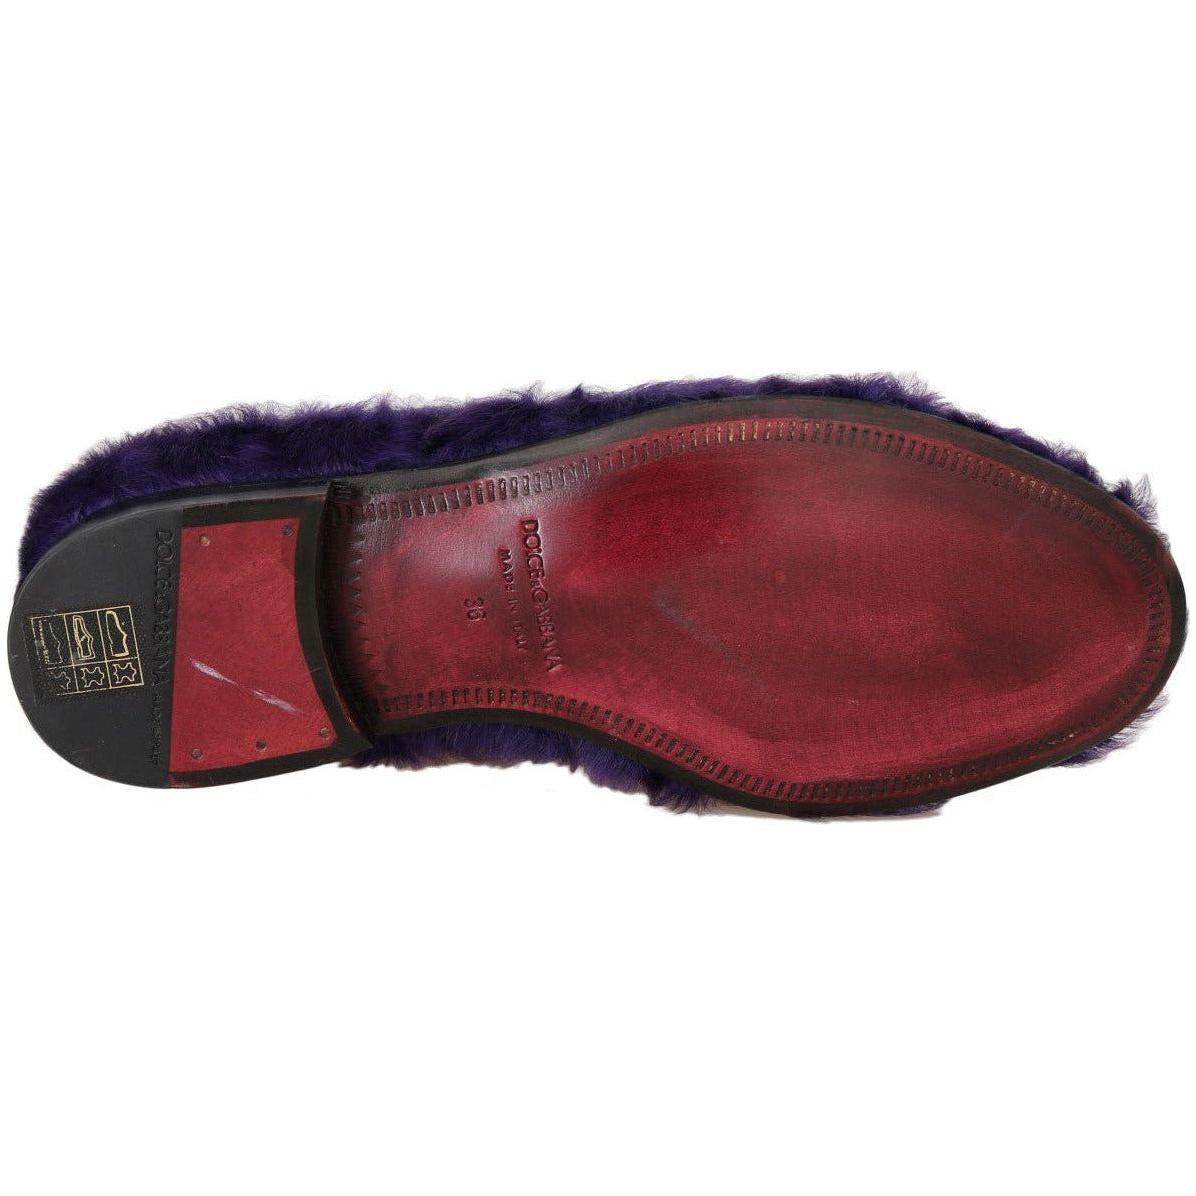 Dolce & Gabbana Plush Purple Sheep Fur Loafers purple-sheep-fur-leather-loafers 466240-purple-sheep-fur-leather-loafers-2.jpg